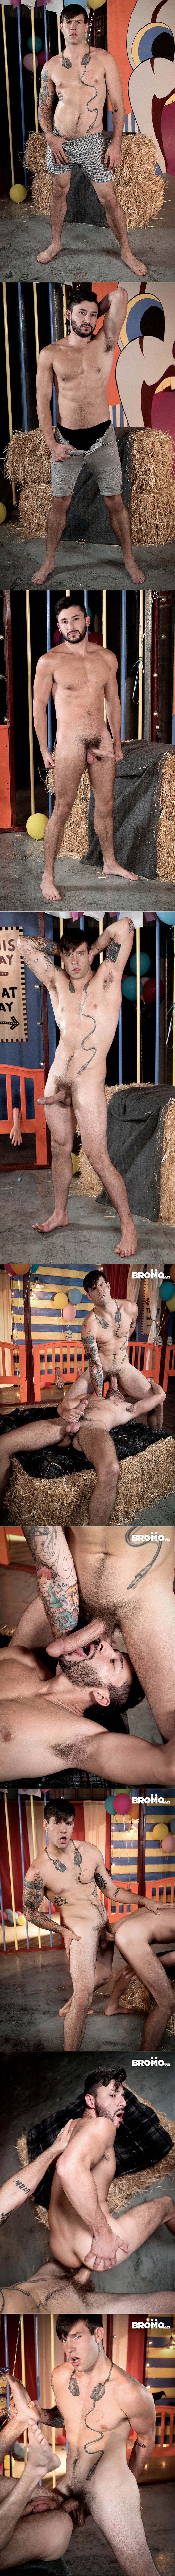 BROMO Sexual Nightmare Part 2 Bareback Gay Sex Hairy Feet Legs Tattoos Male Feet Buck Richards, Scott DeMarco 1